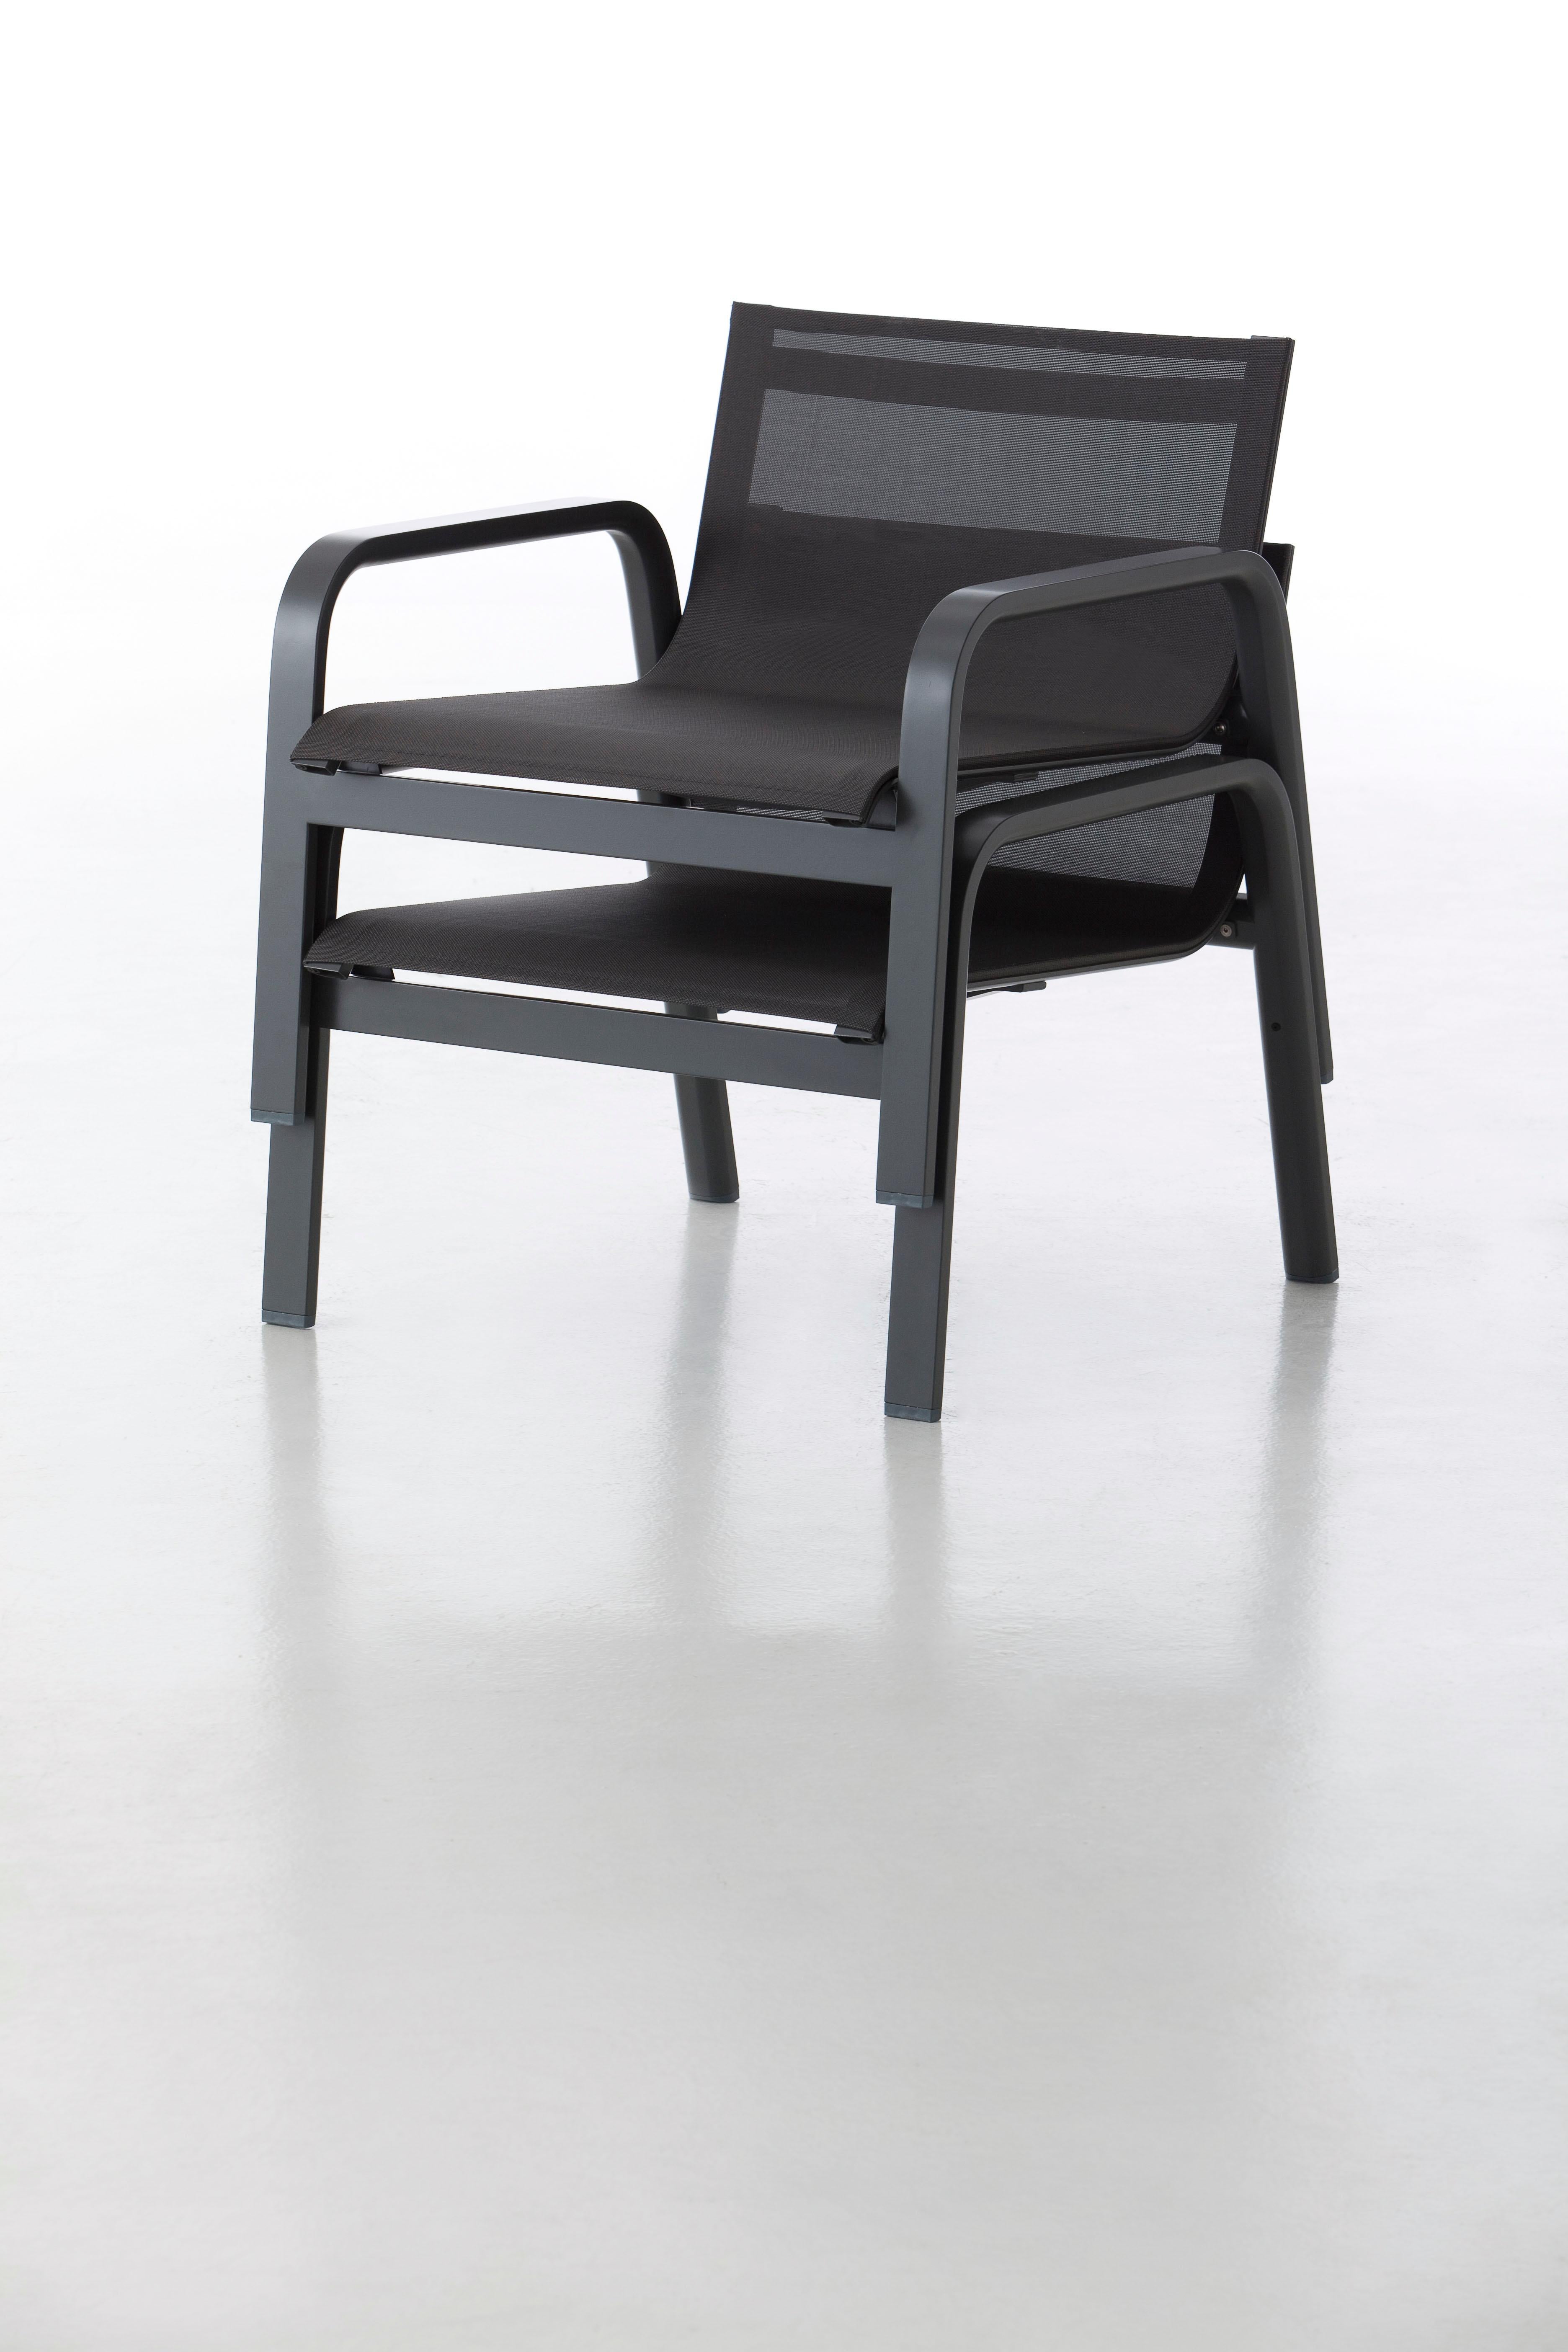 Modern Gandia Blasco Stack Lounge Chair in Aluminum by Borja Garcia For Sale